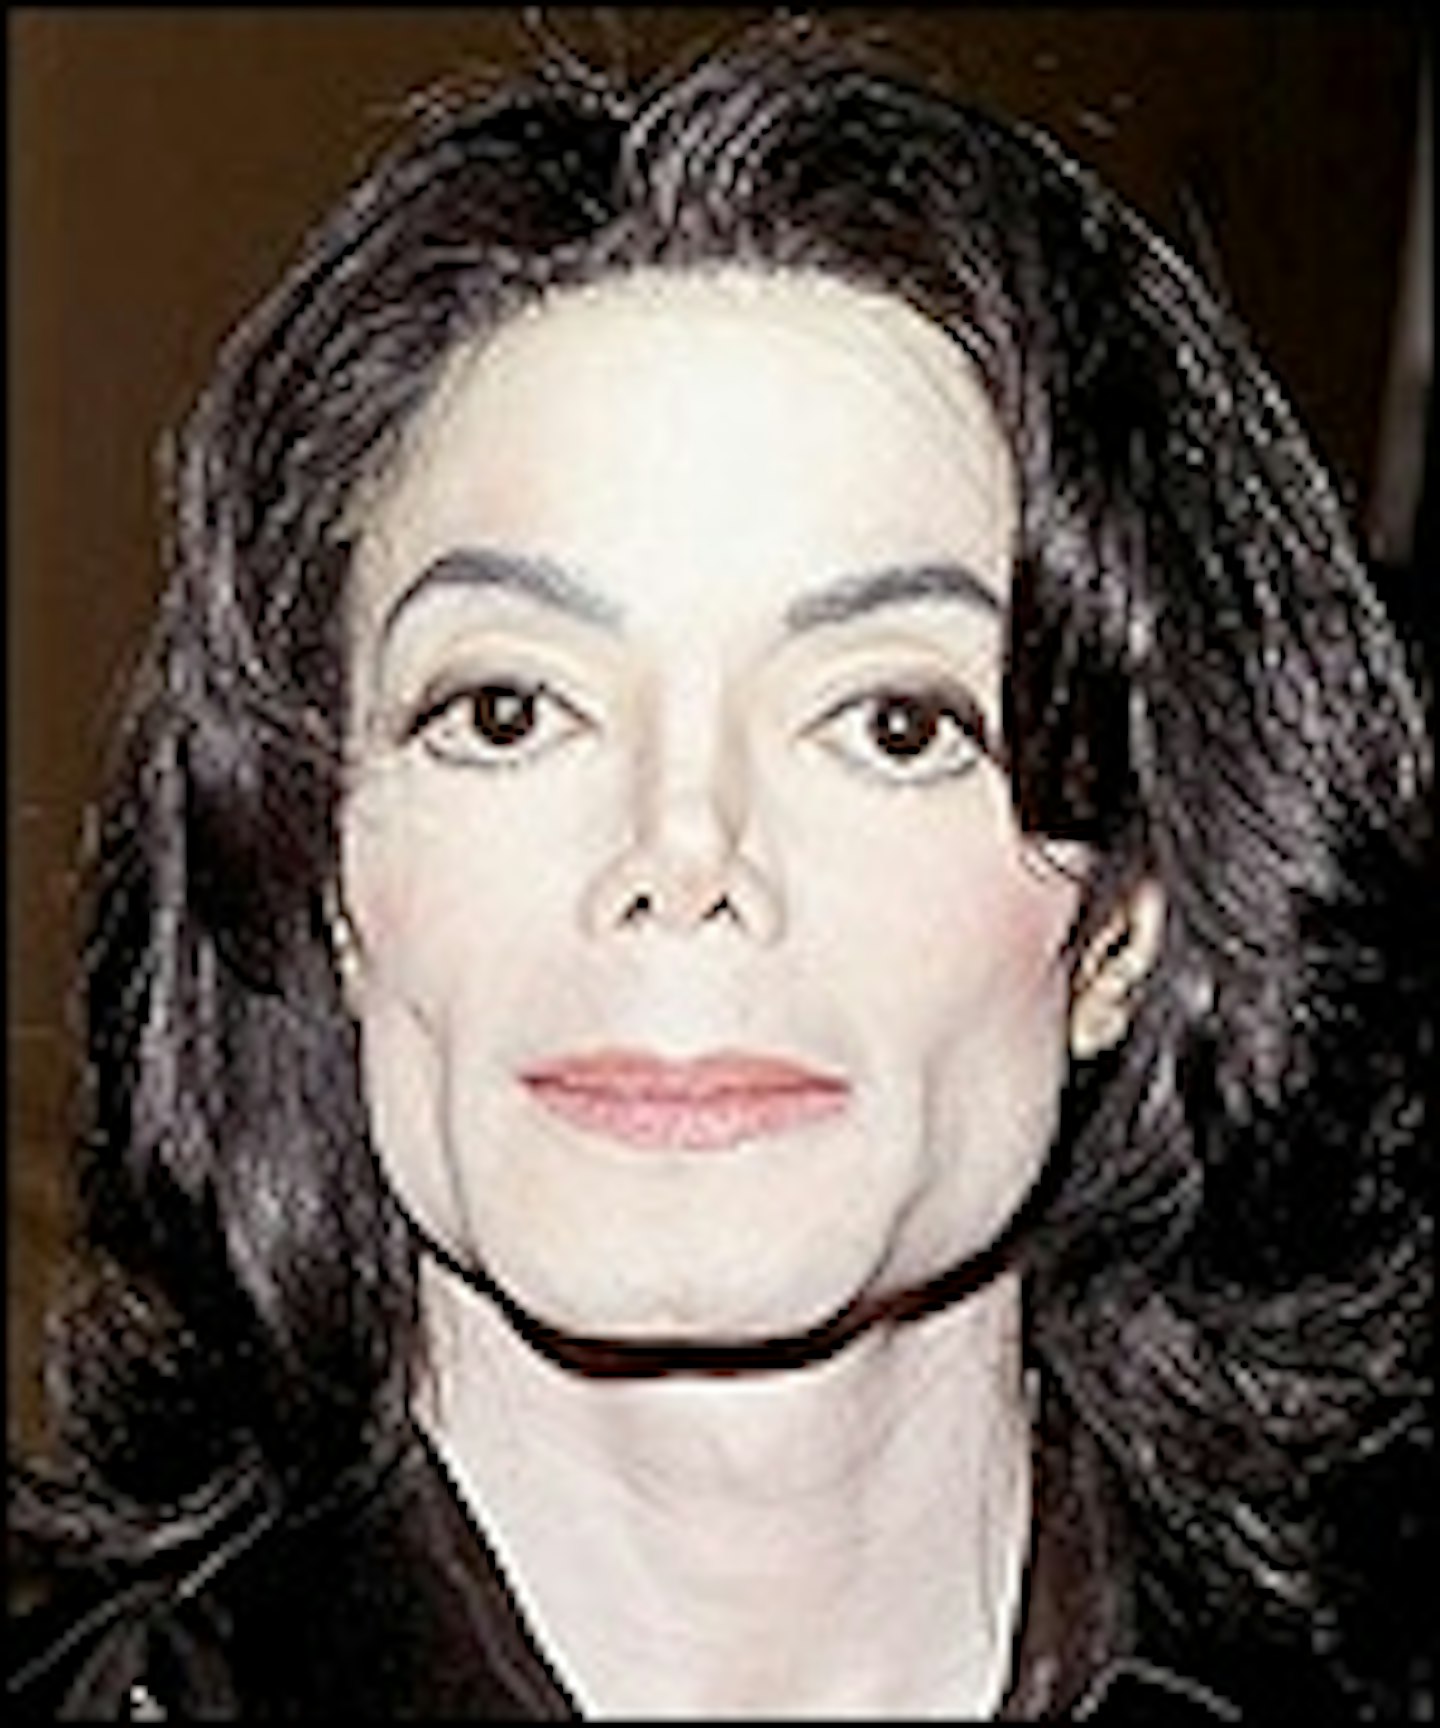 Michael Jackson Has Died